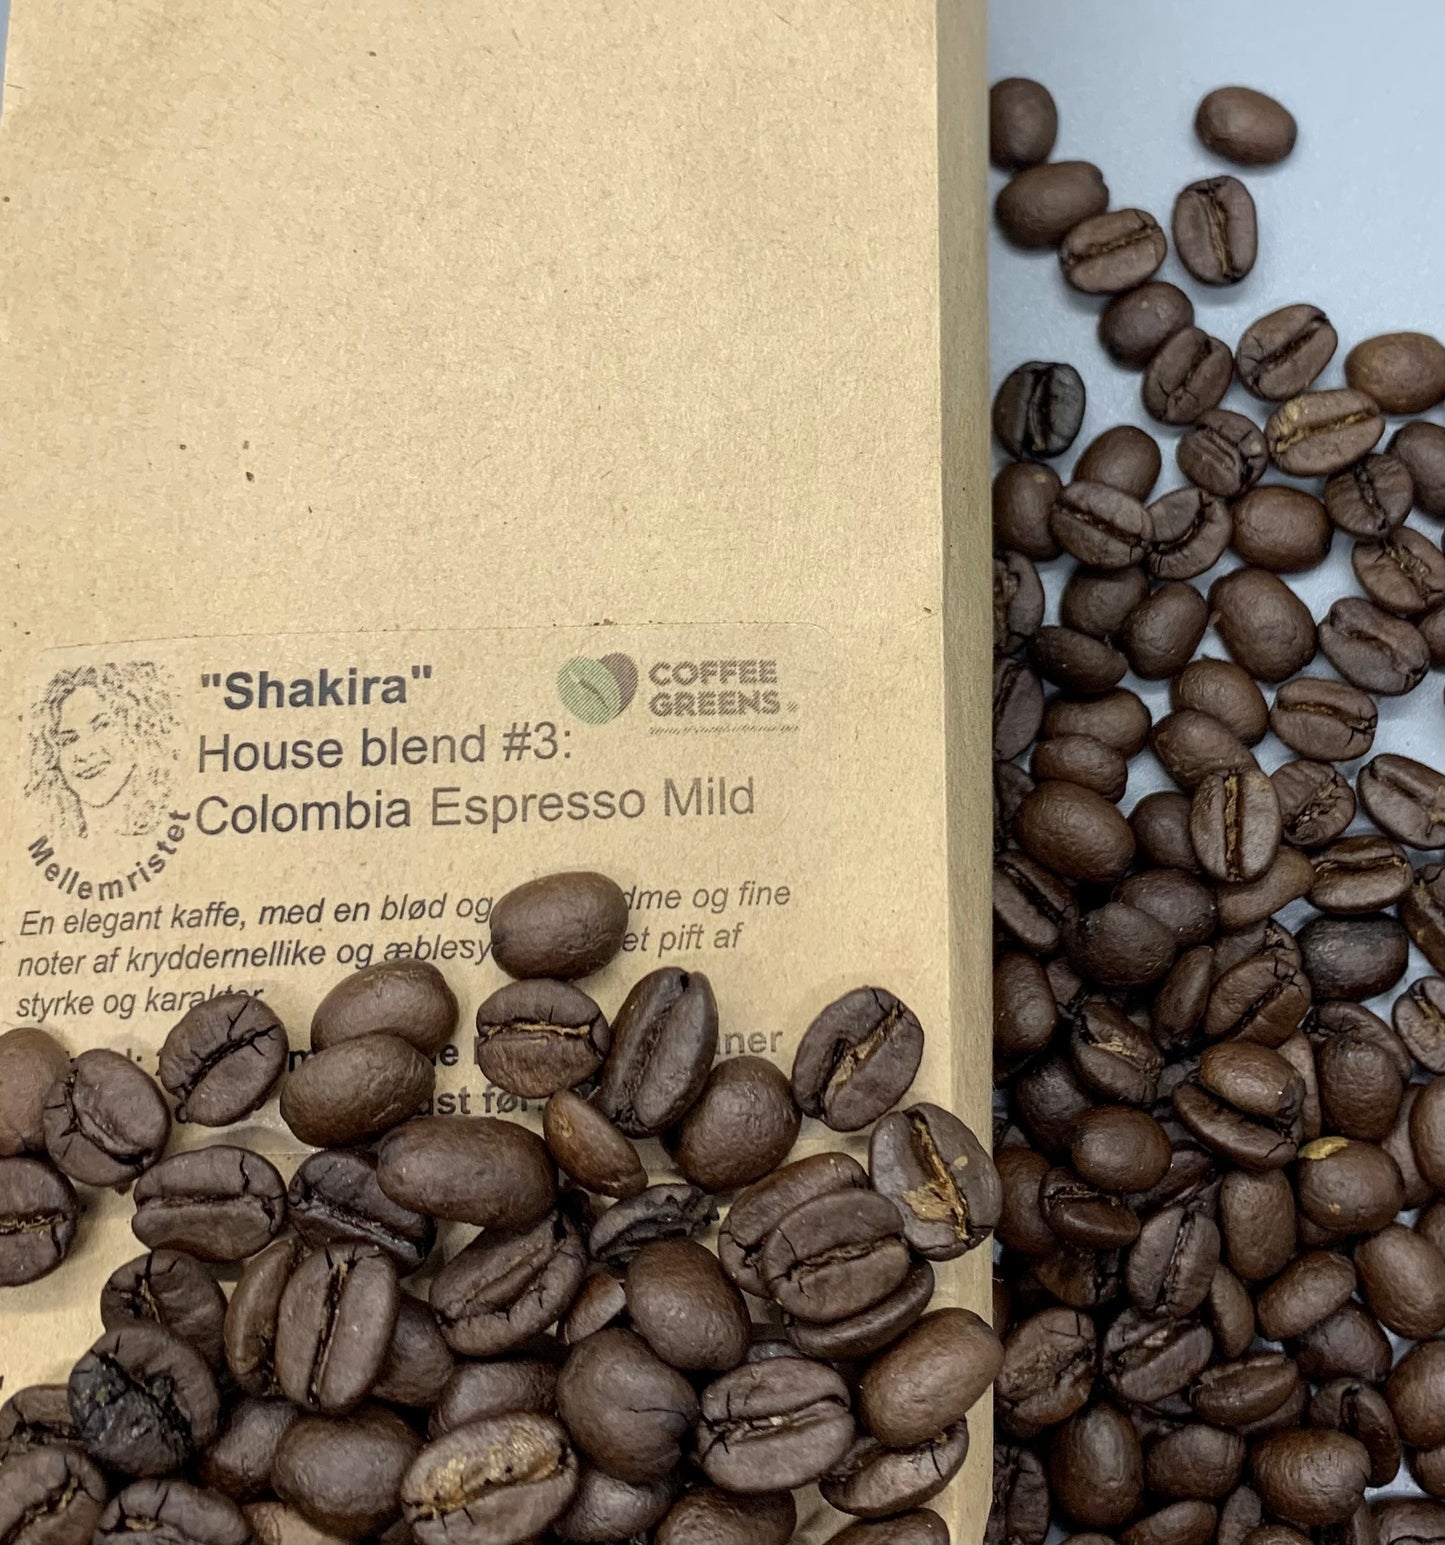 "Shakira" - House blend #3: Colombia Espresso Mild - Ristede kaffebønner